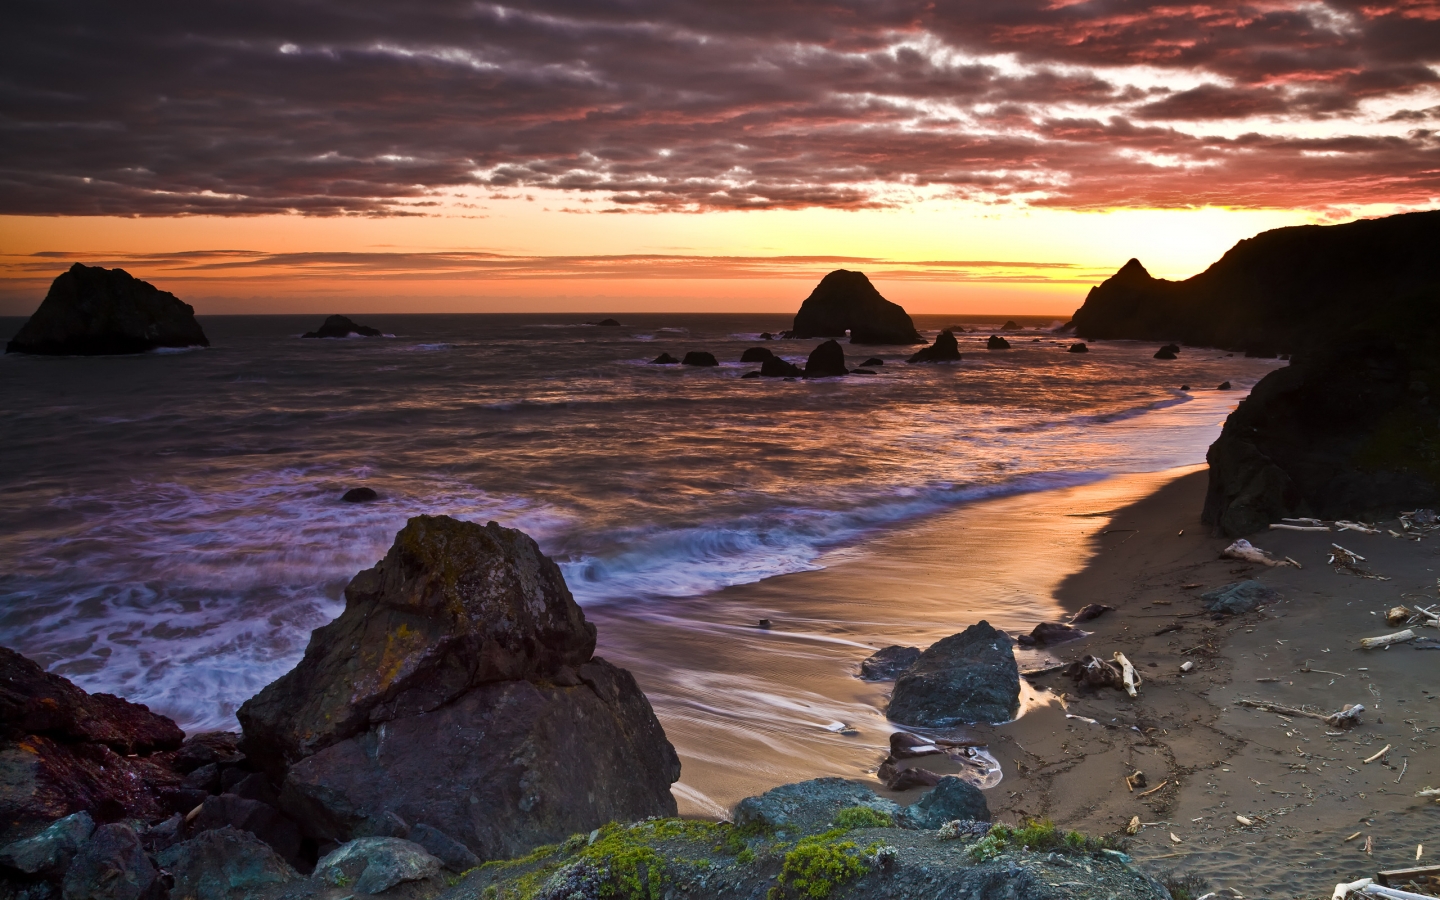 Sonoma Coast for 1440 x 900 widescreen resolution